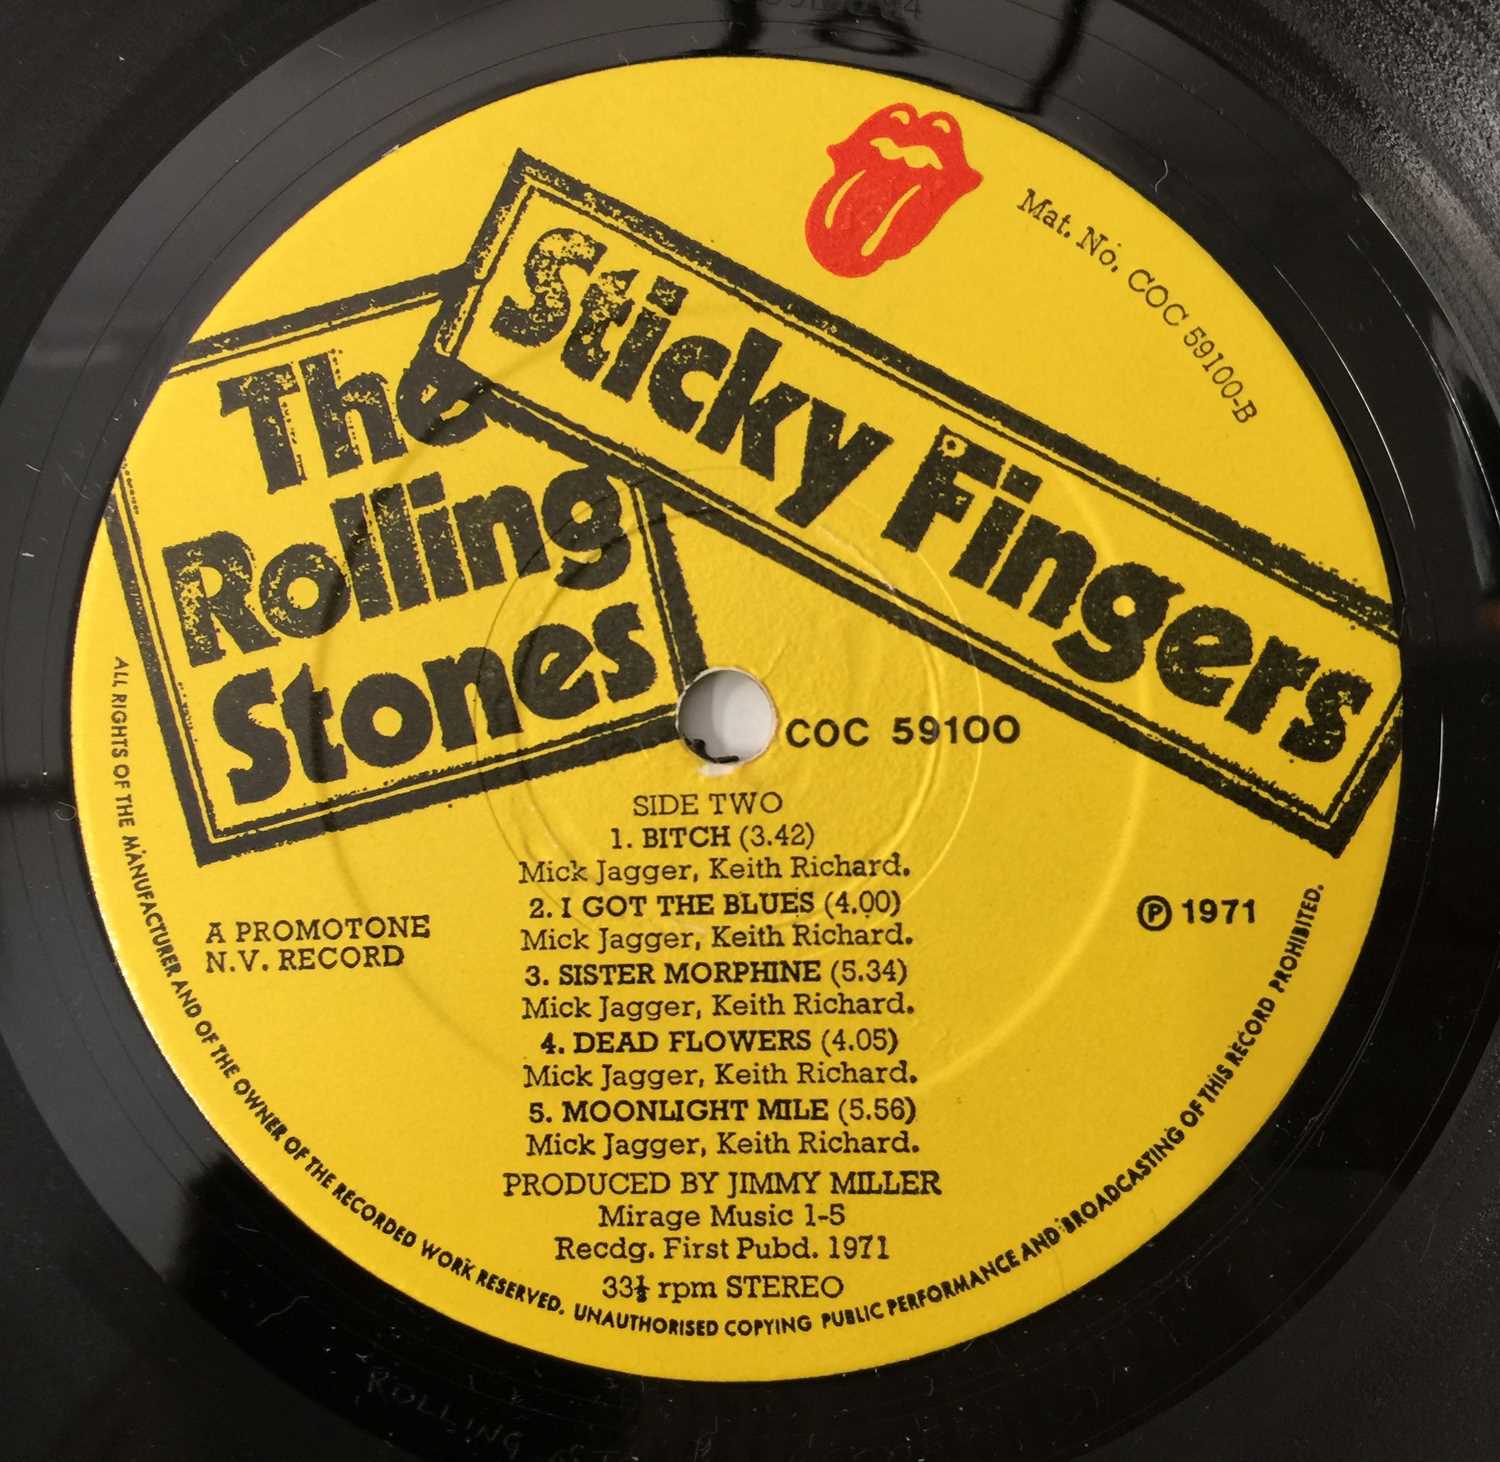 THE ROLLING STONES - STICKY FINGERS LP (GATEFOLD ORIGINAL UK PRESSING - COC 59100) - Image 4 of 5